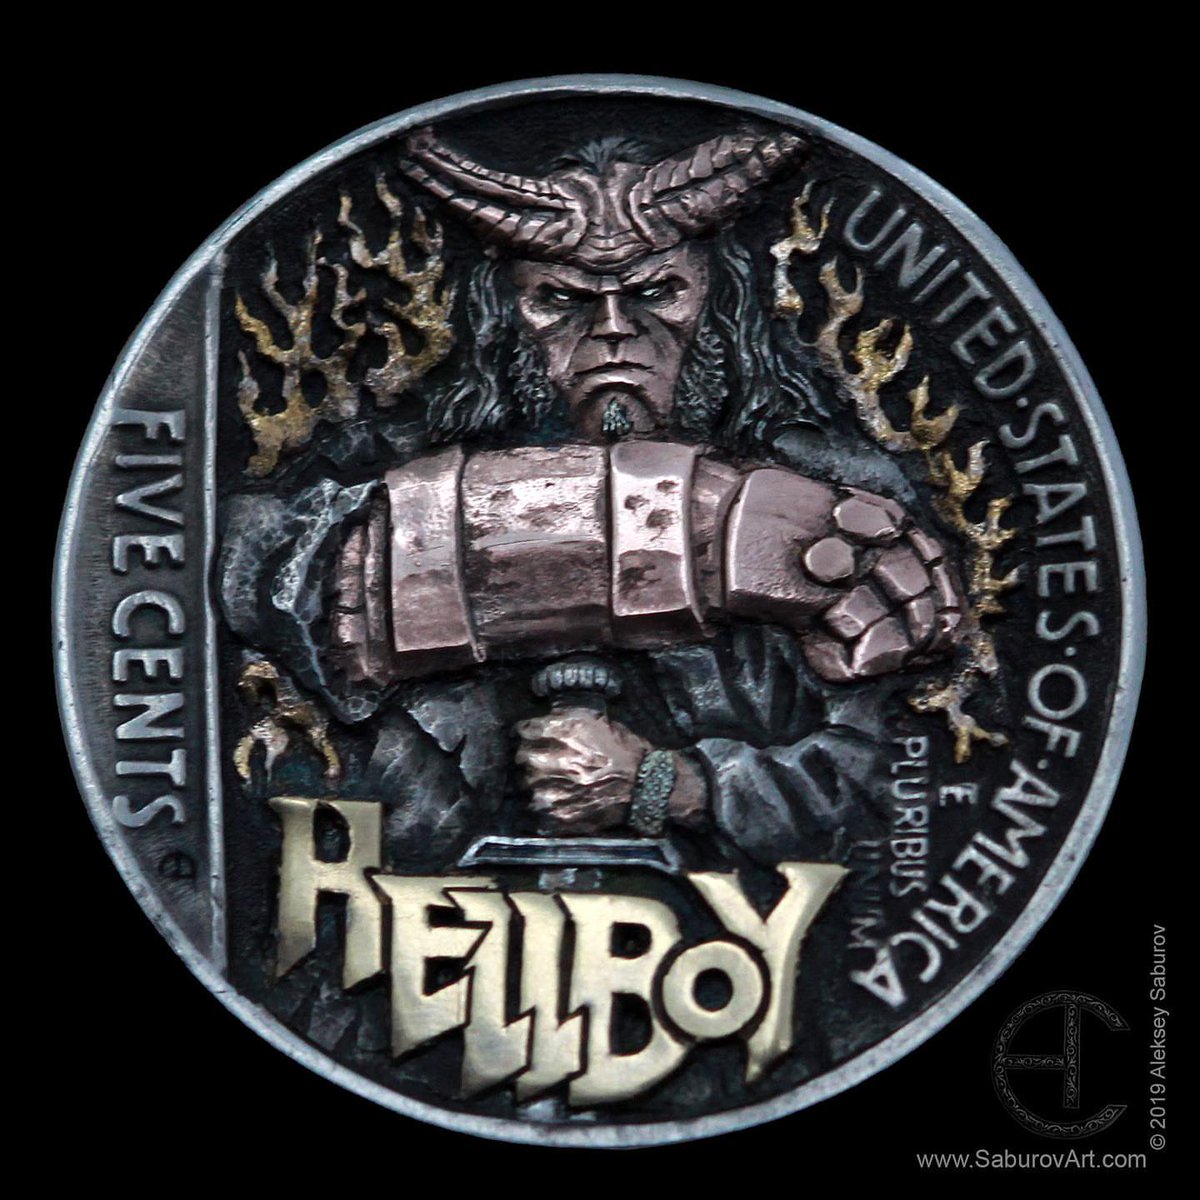 Hobo Nickel Society Otd 4 2 04 Hellboy Supernatural Superhero Film Starring Ronperlman Was Released U S Hobonickel Coincarving By Alekseysaburov Saburovart T Co 3pdnvdpnyv